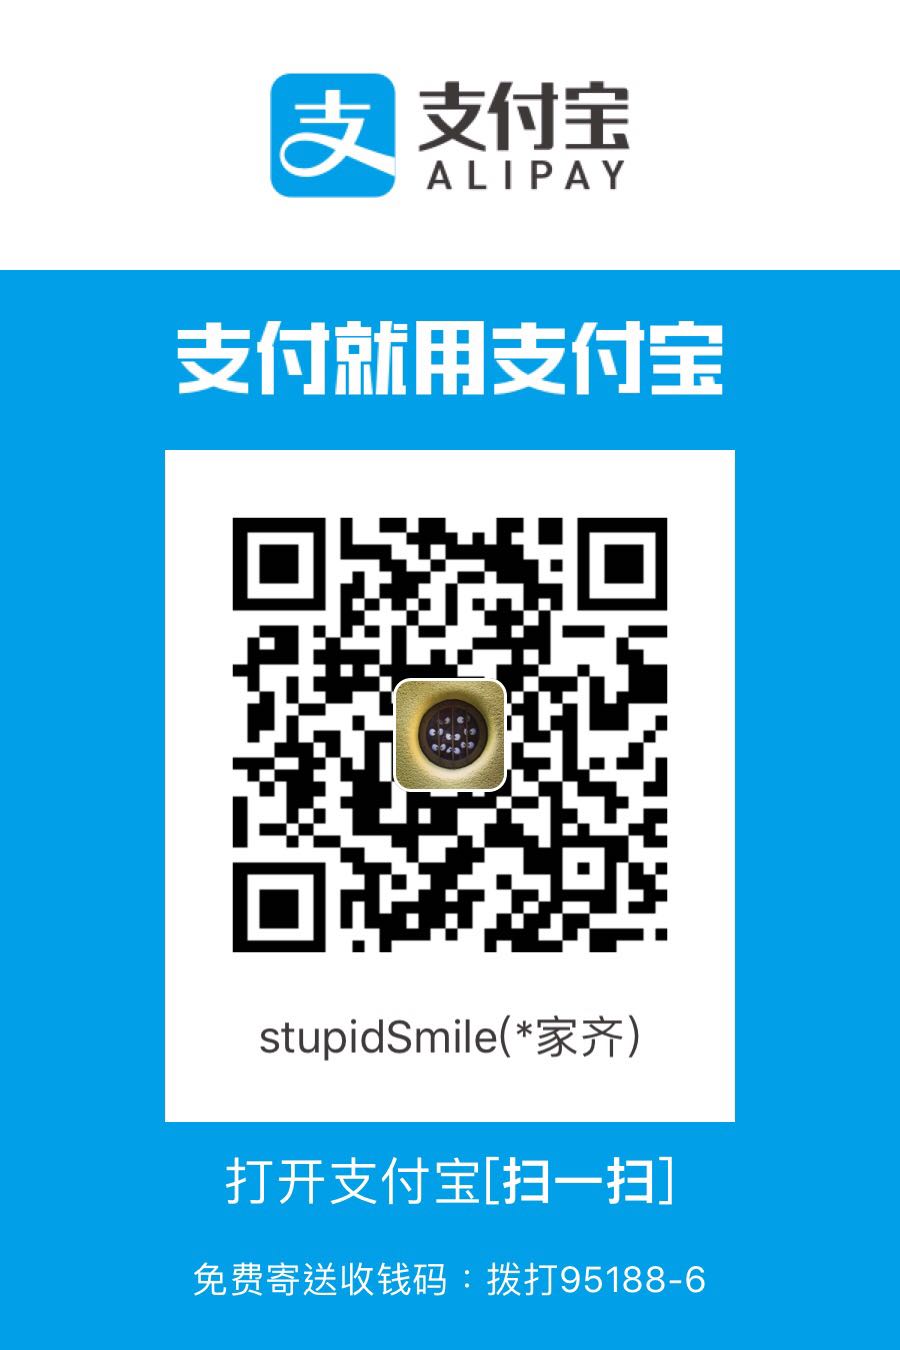 Alipay_stupidsmilegmail.com